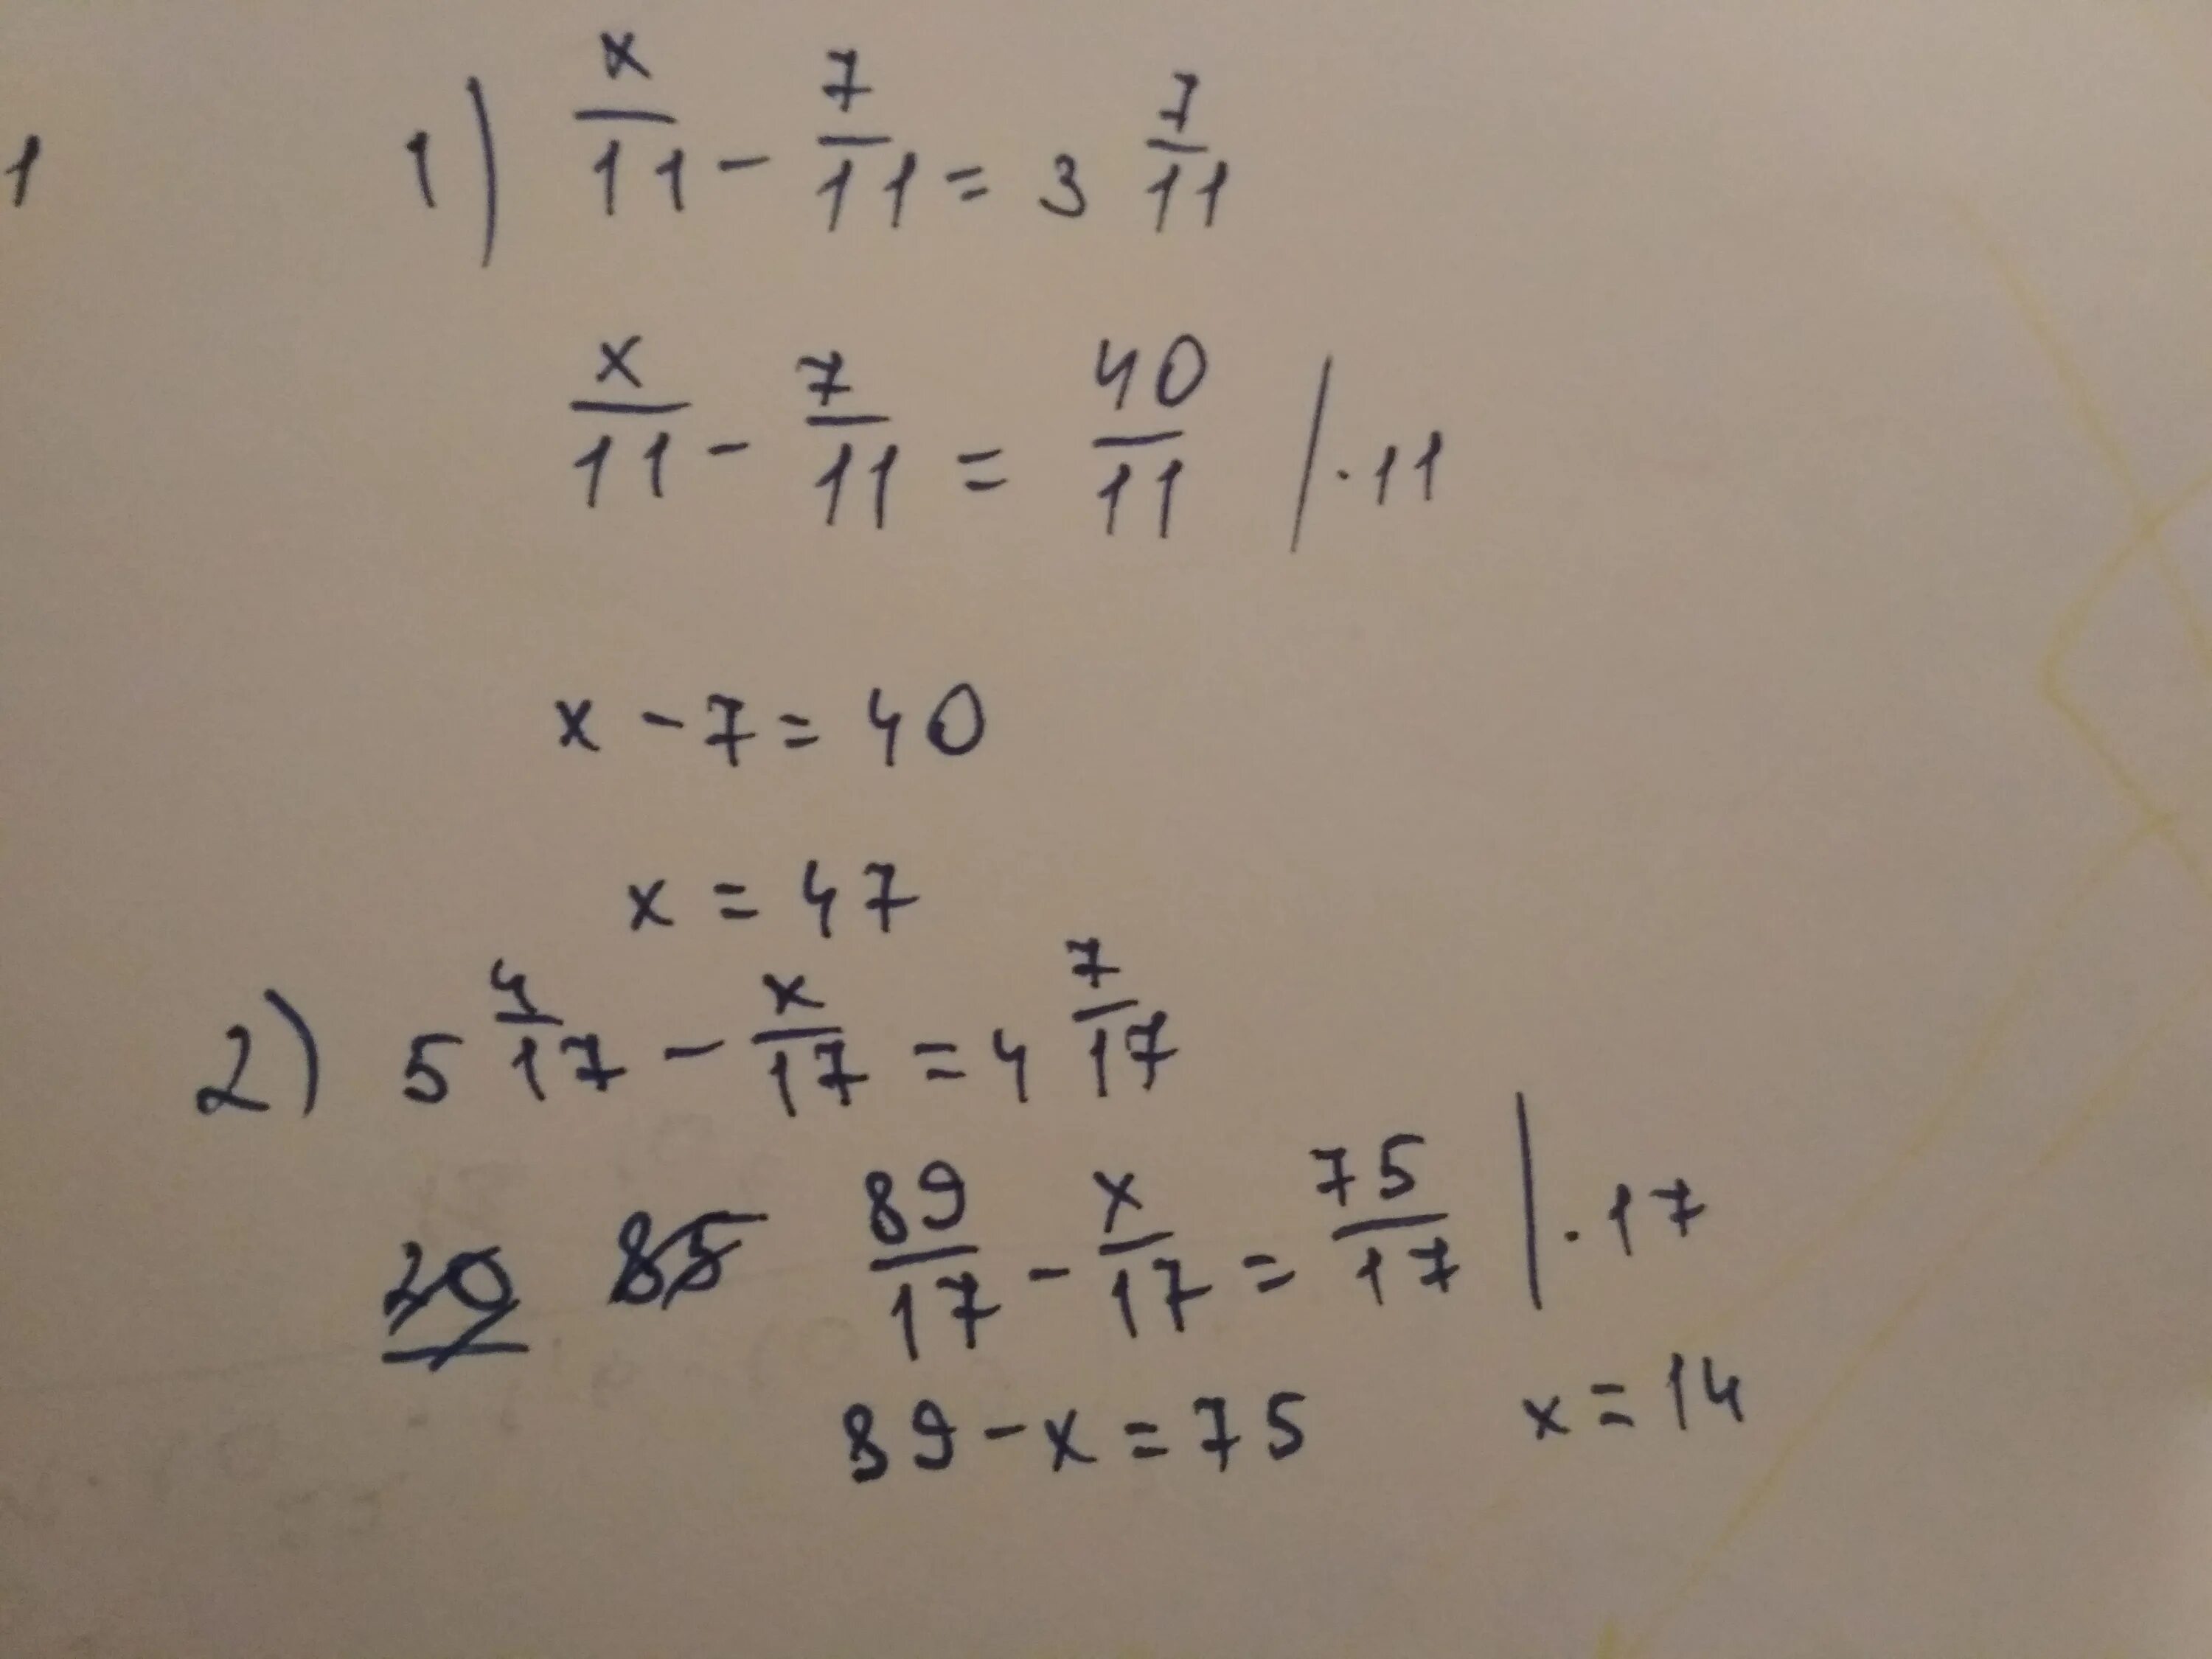 11/Х+4 -11/7. Х-У=7 Х+У=11. Реши уравнение 5:( 2 целых 1/2+x)= 5целых 3/4. -7/11х=1 3/11. Уравнение 7x 1 9x 3 5